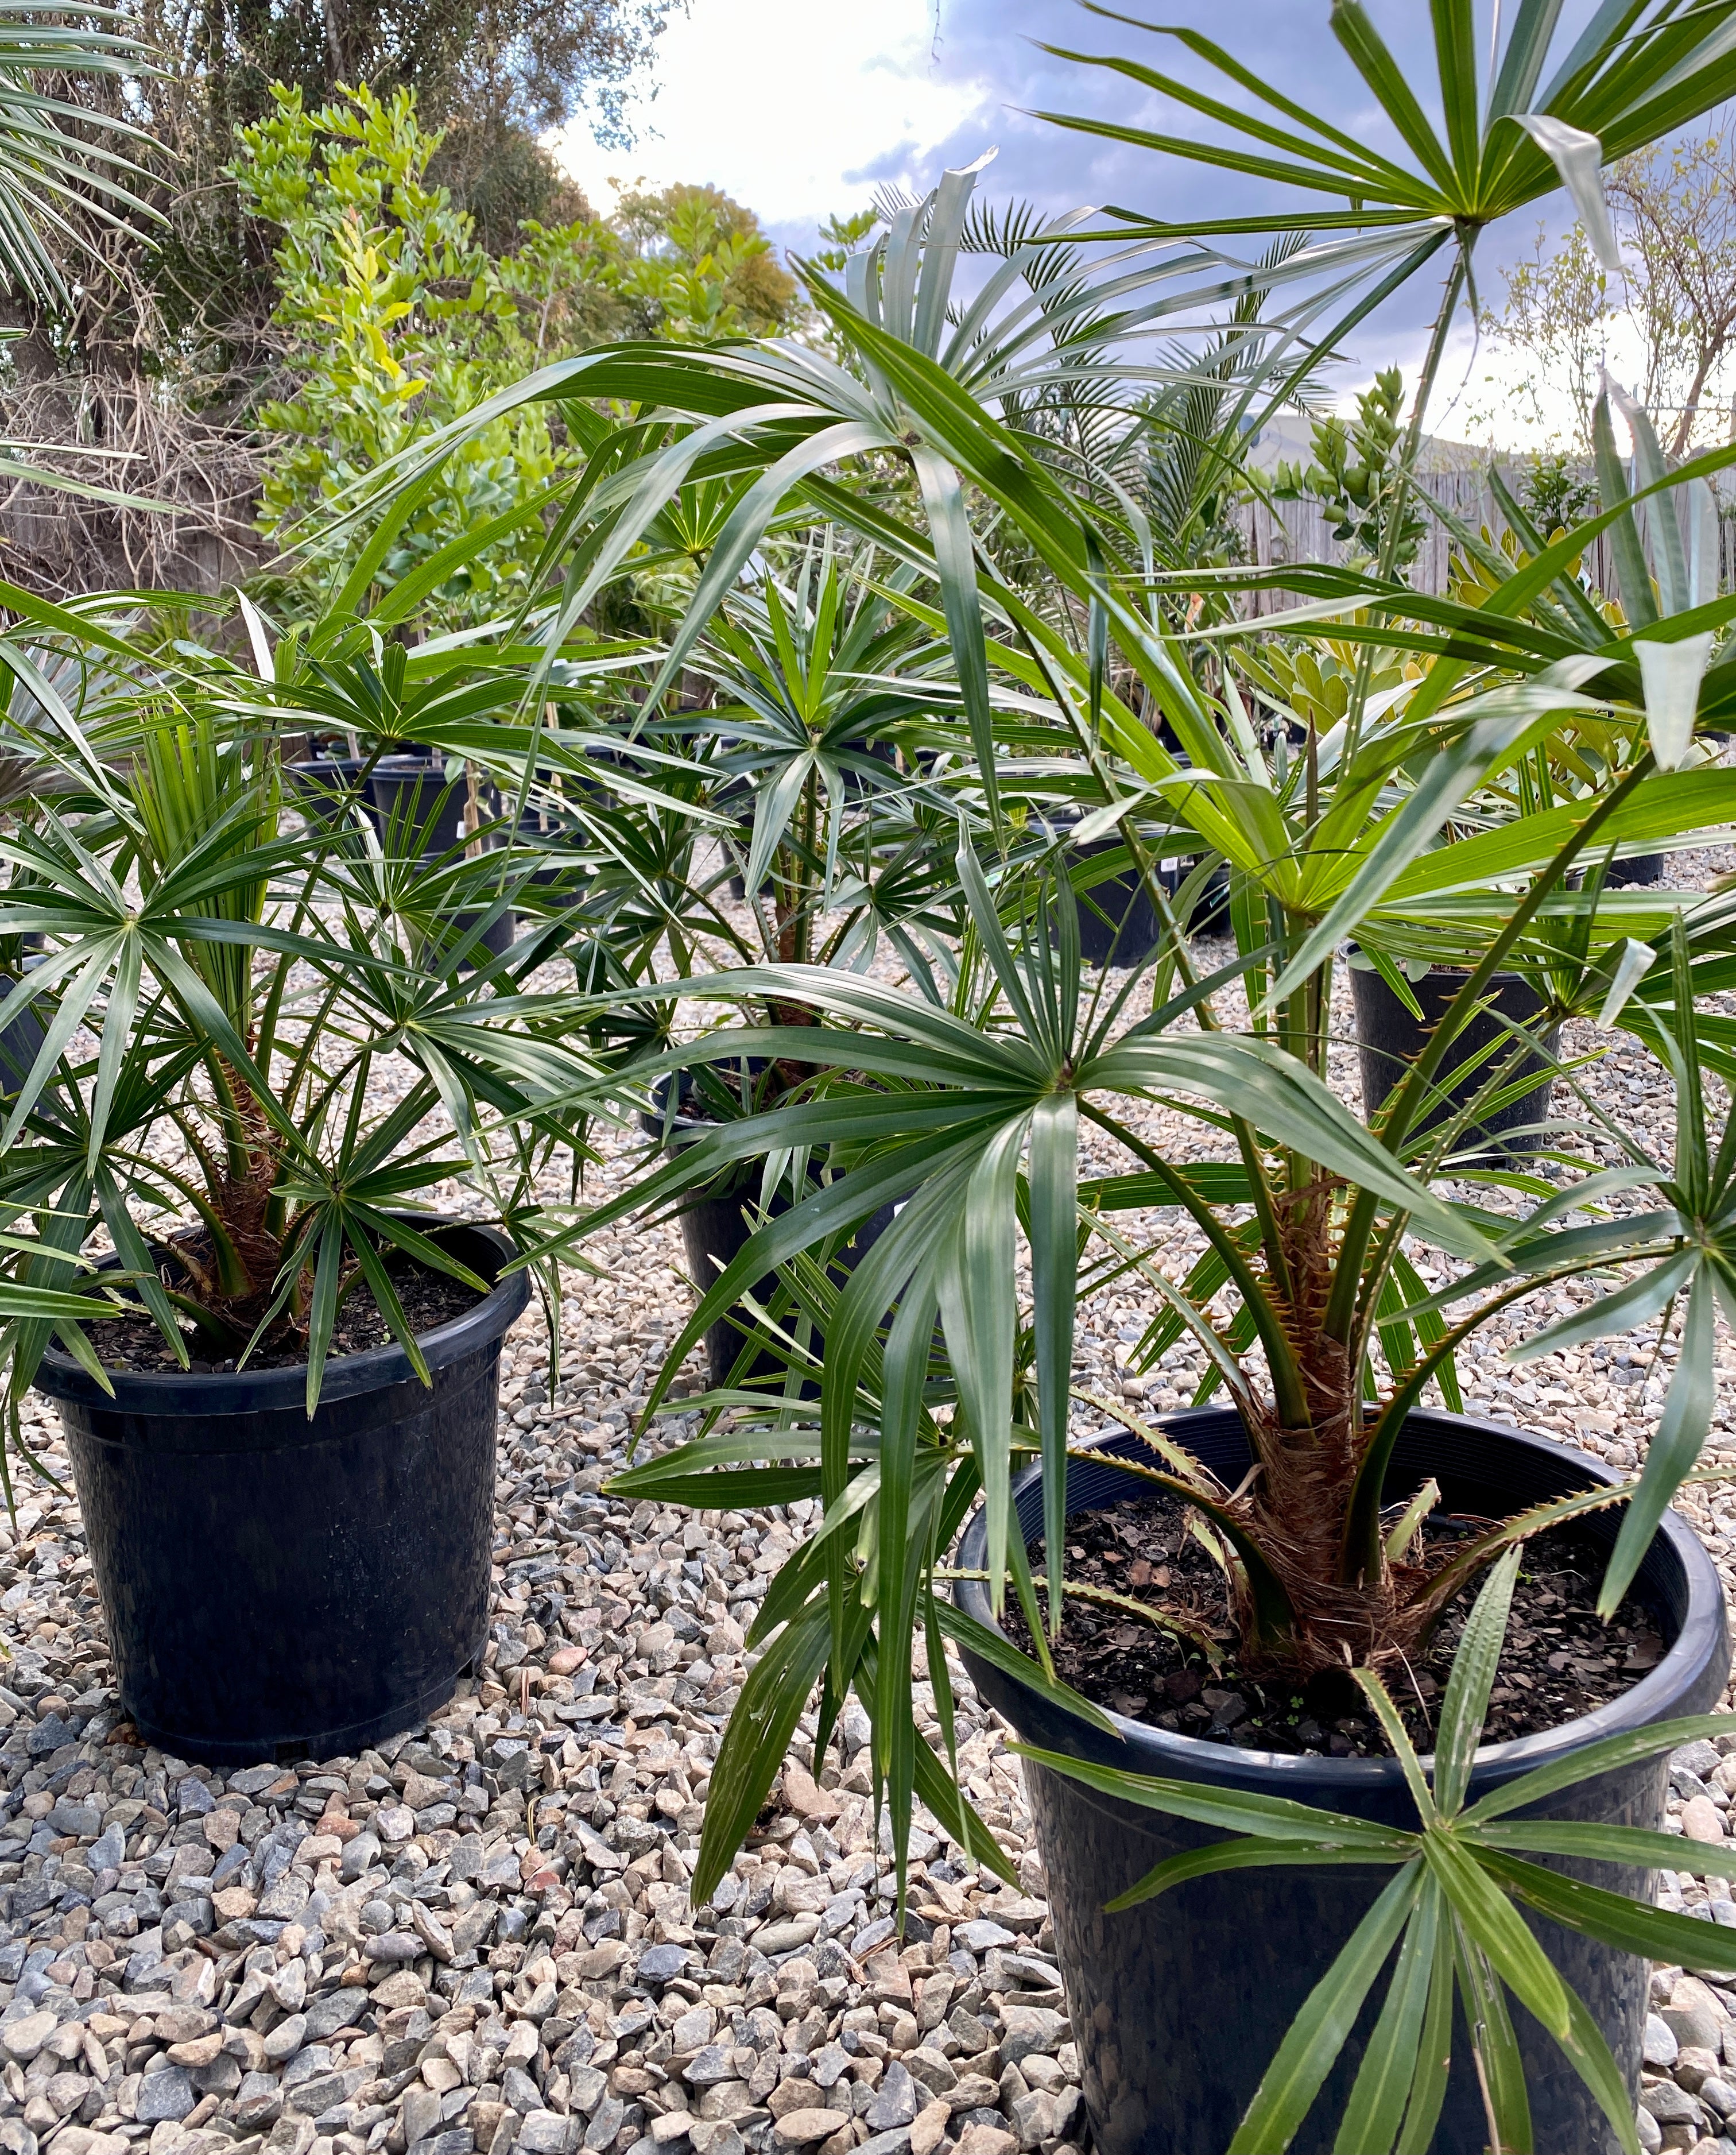 Livistona australis - Australian Cabbage Palm